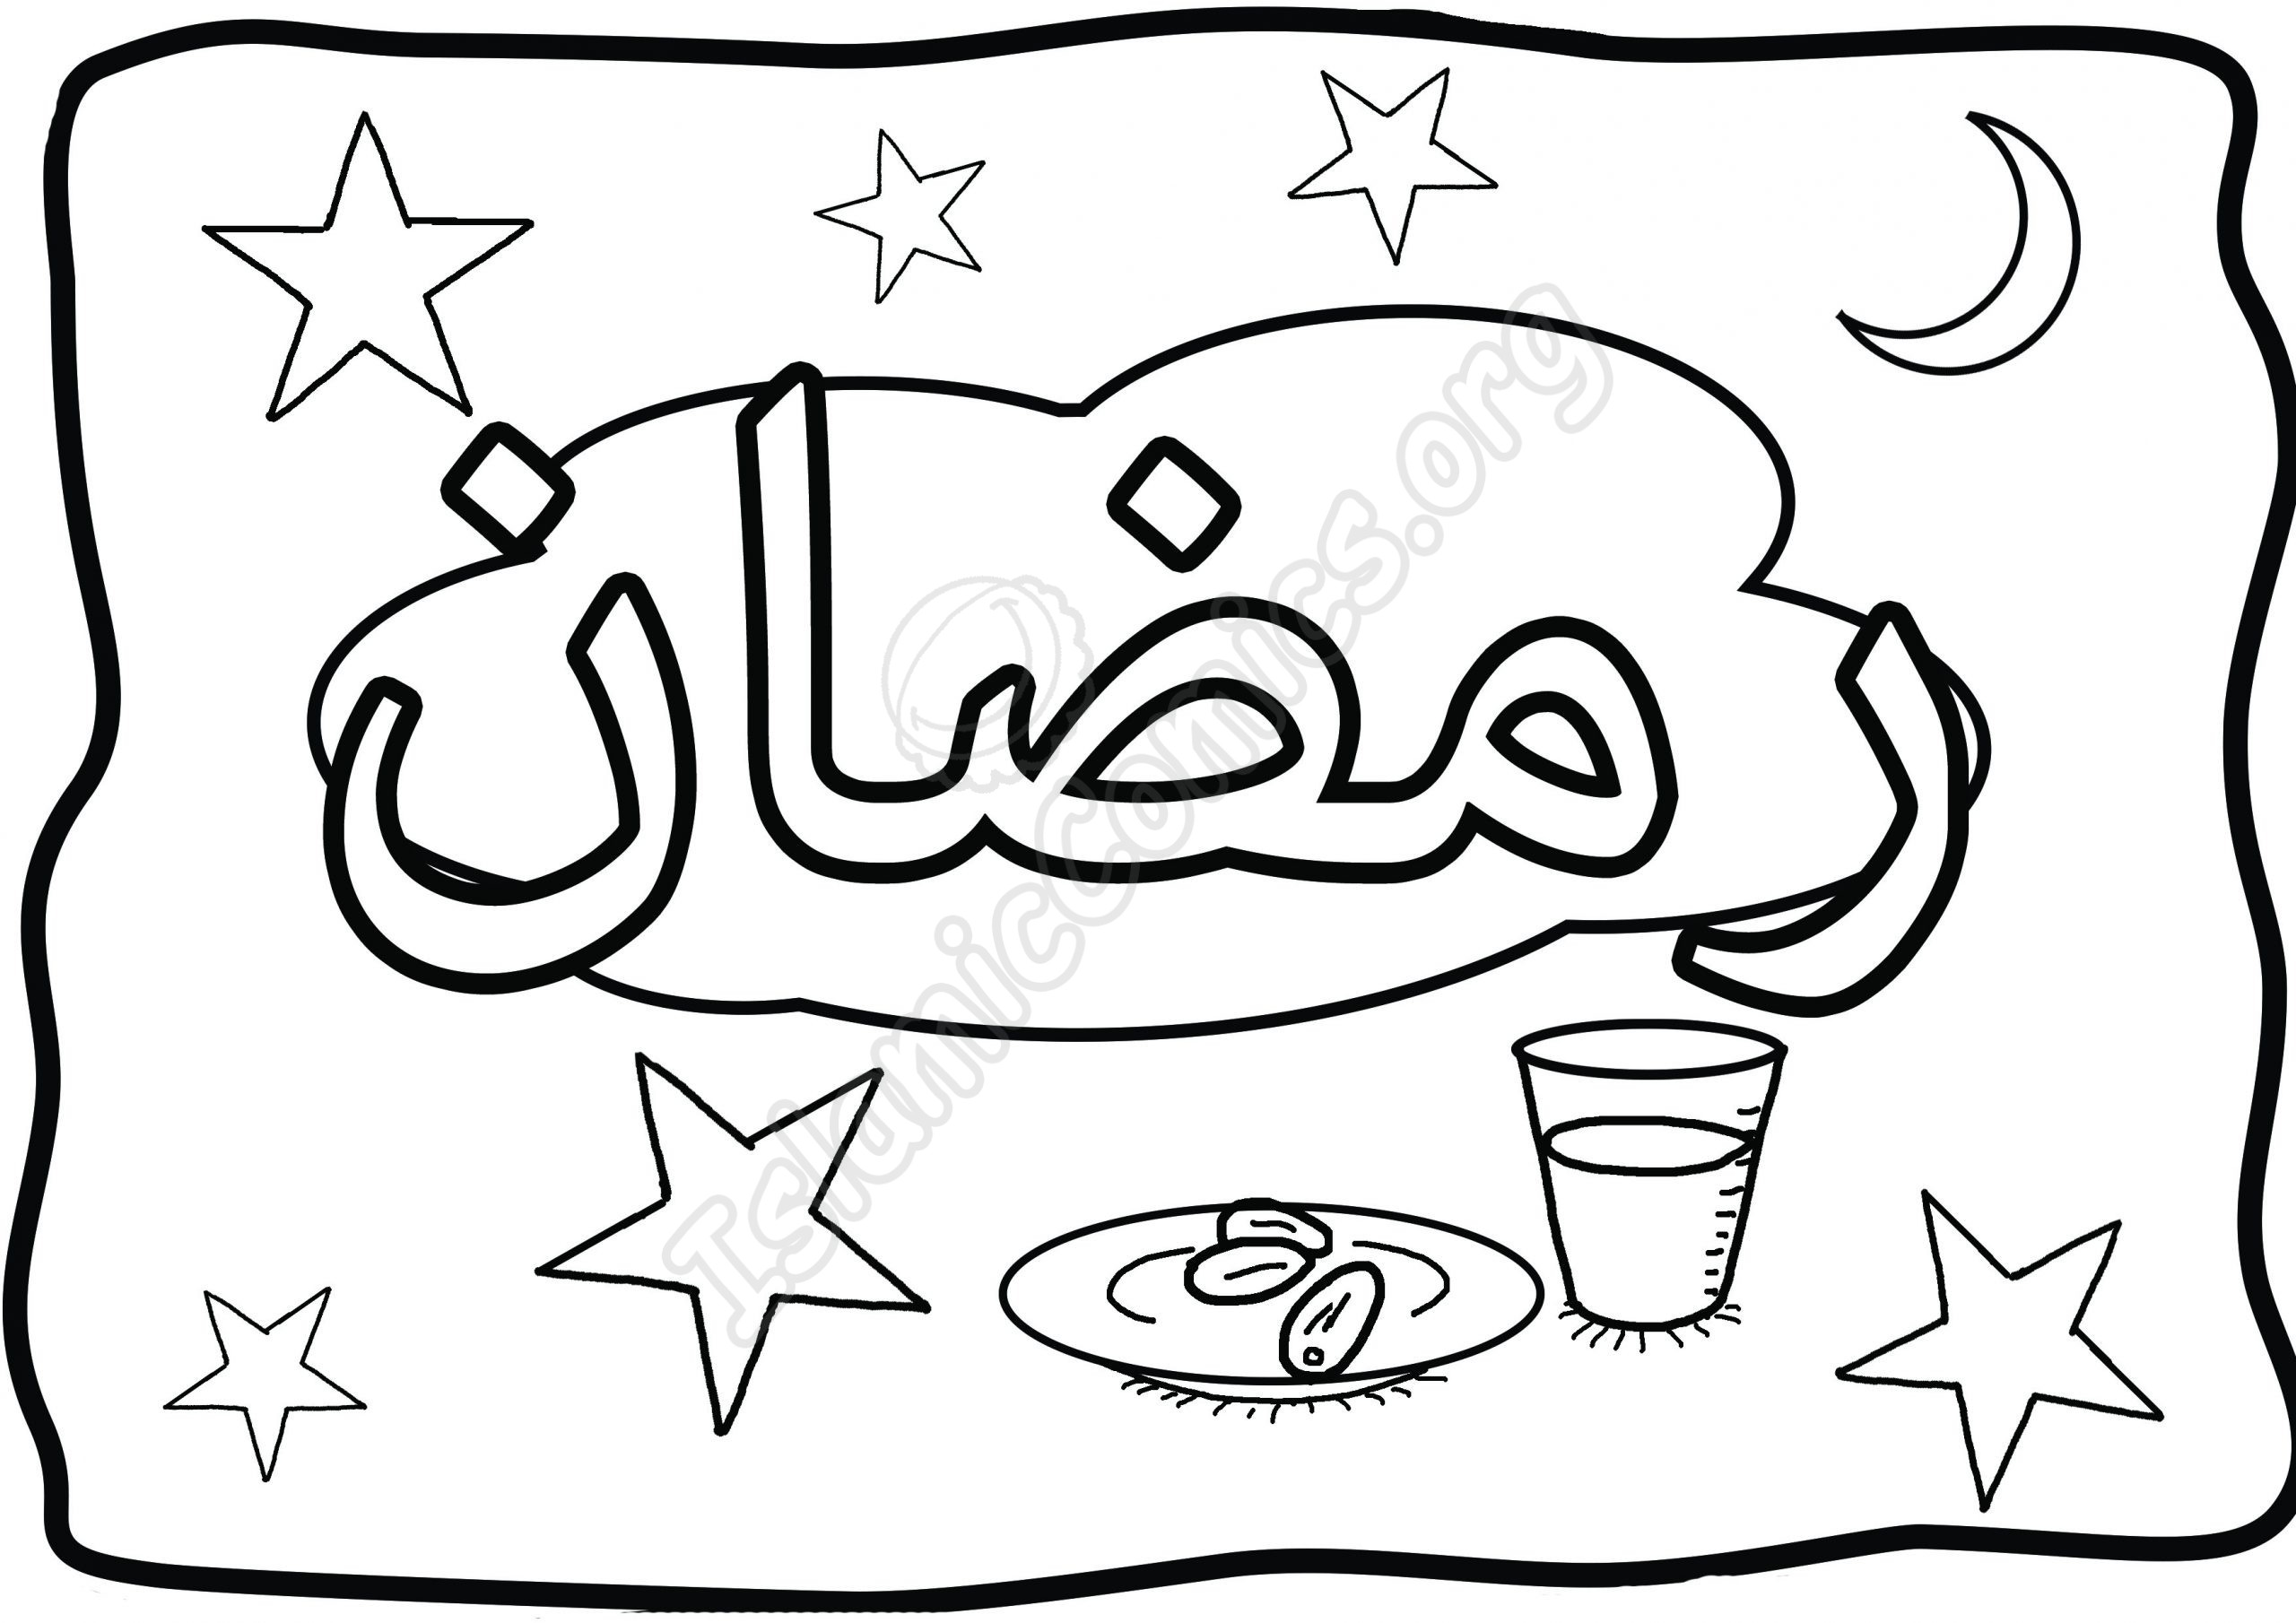 Ramadan - Coloring Page (Arabic)